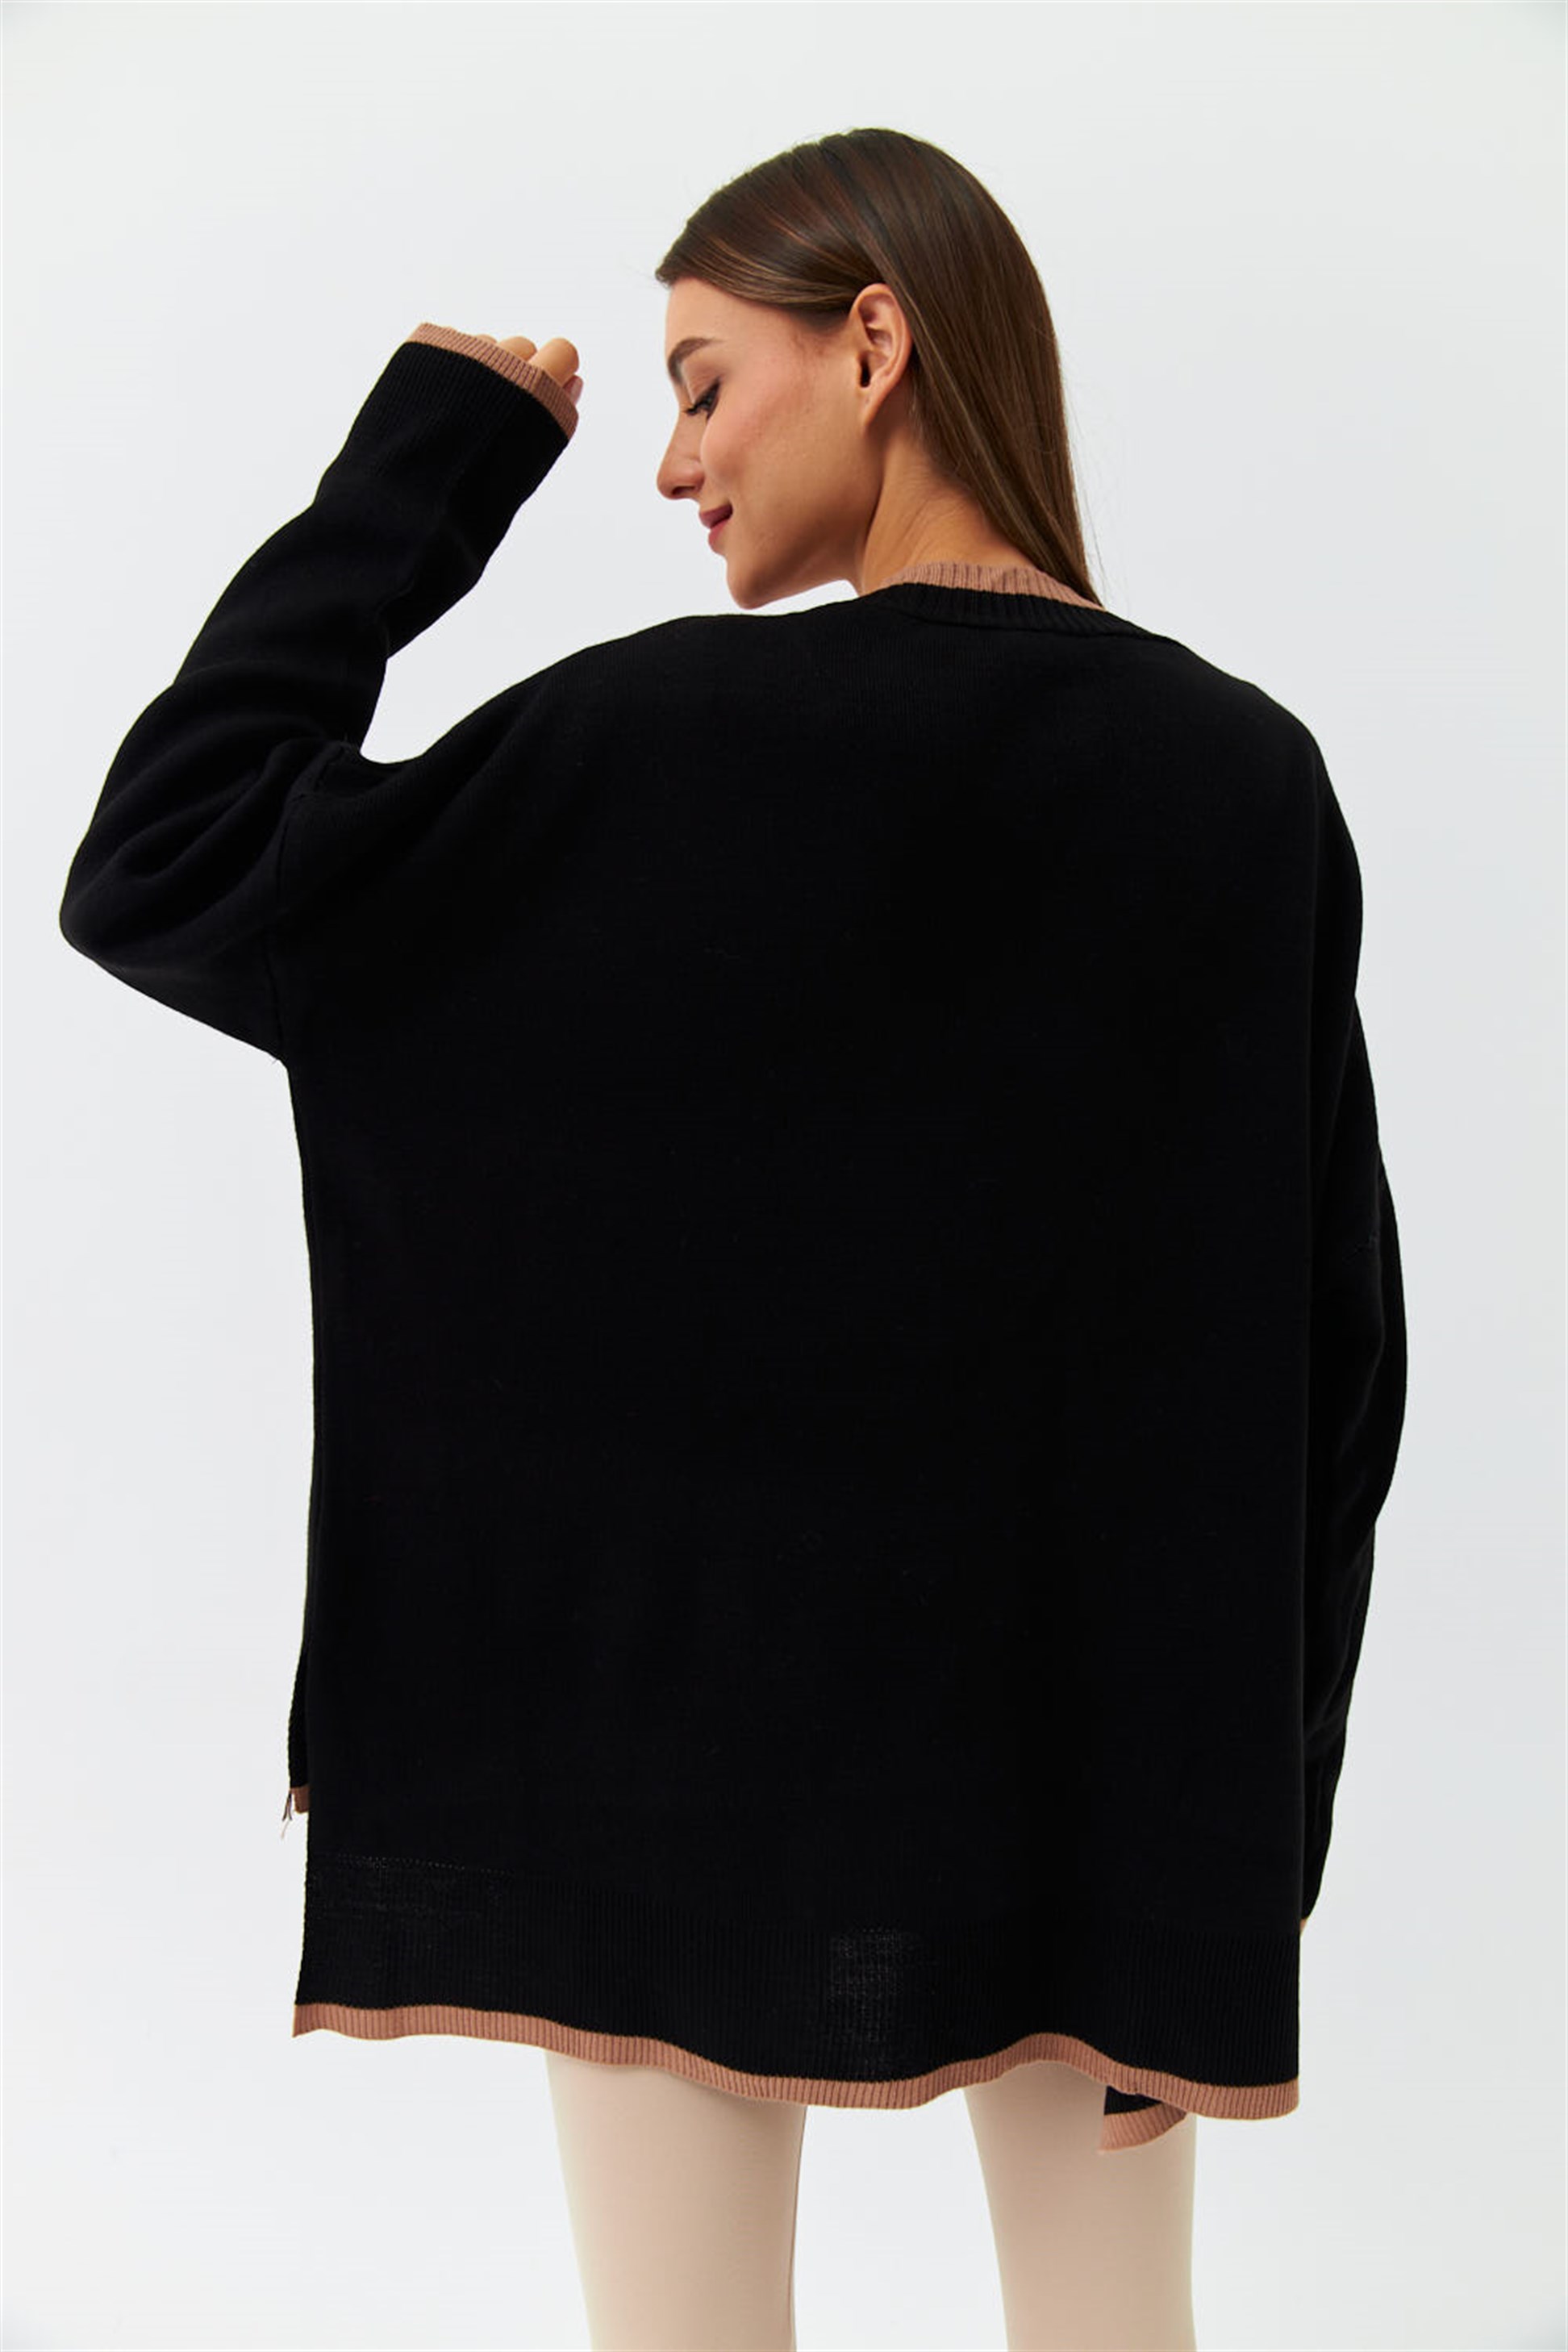 Zara Strickjacke Schwarz XS DAMEN Pullovers & Sweatshirts Strickjacke Party Rabatt 84 % 